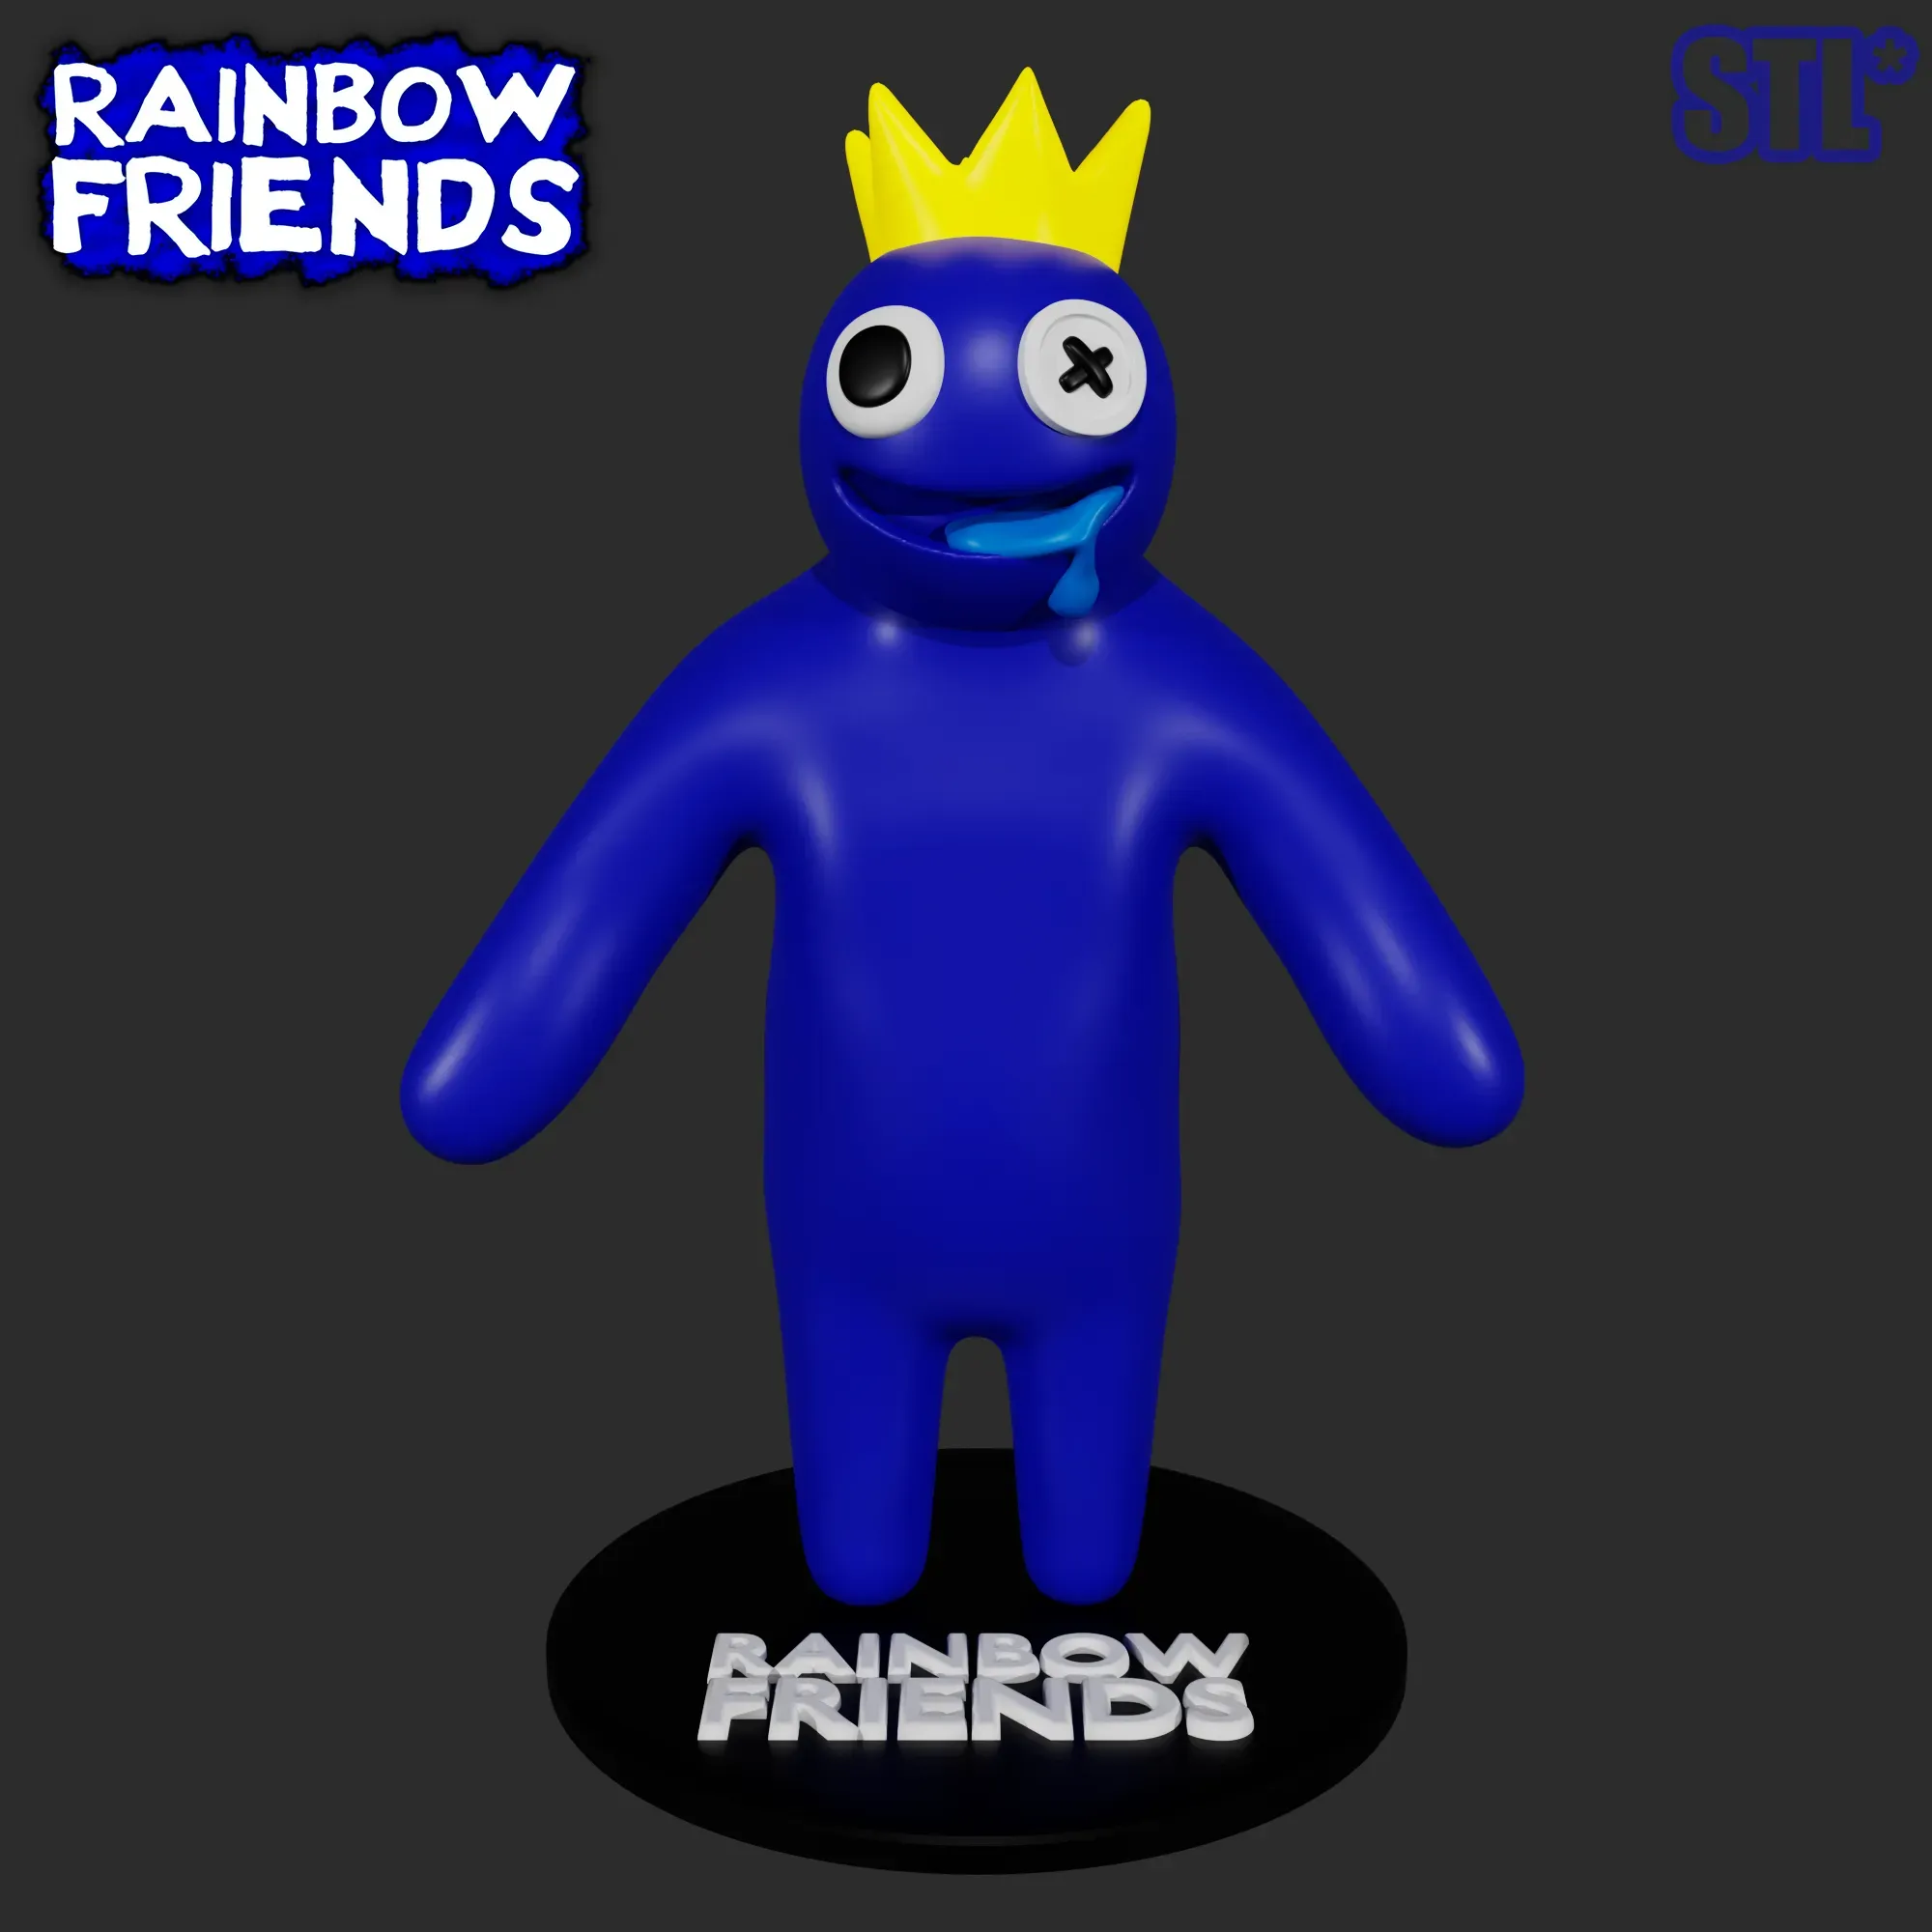 RAINBOW FRIENDS BLUE 3d Model, Roblox